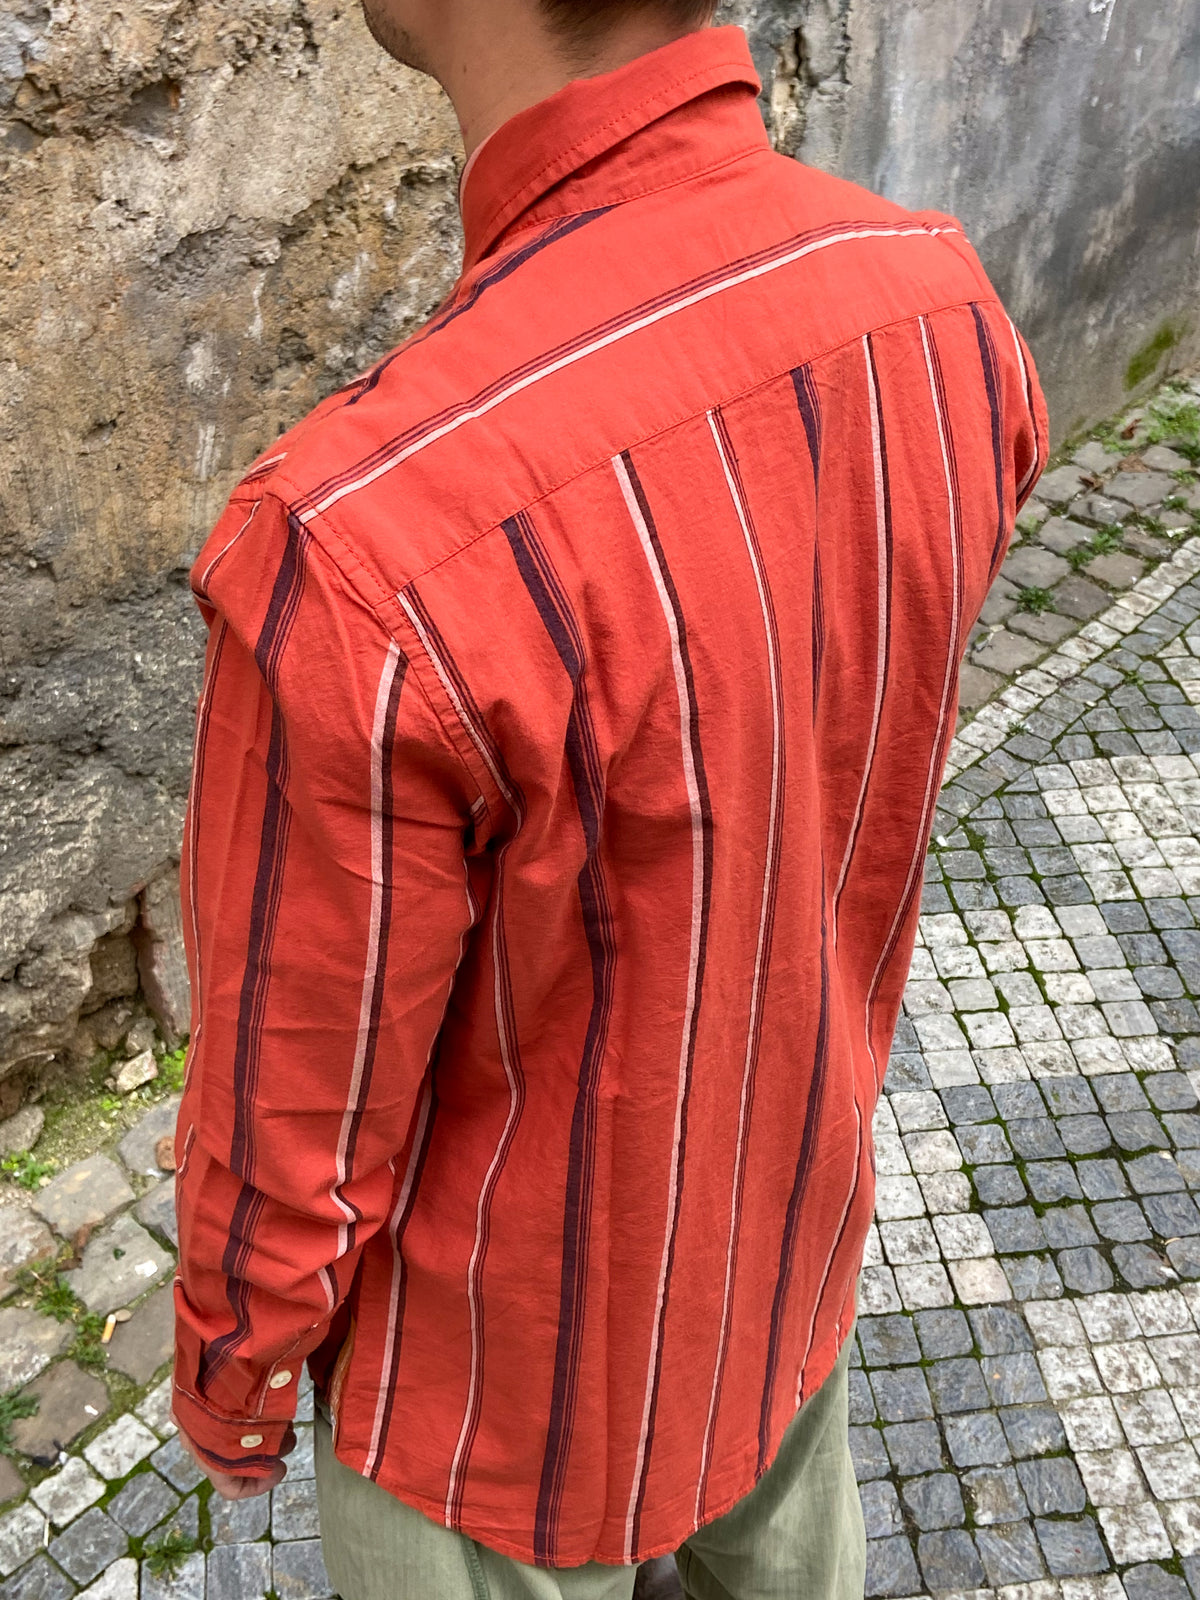 Nudie Jeans Sten Madras Stripe Red